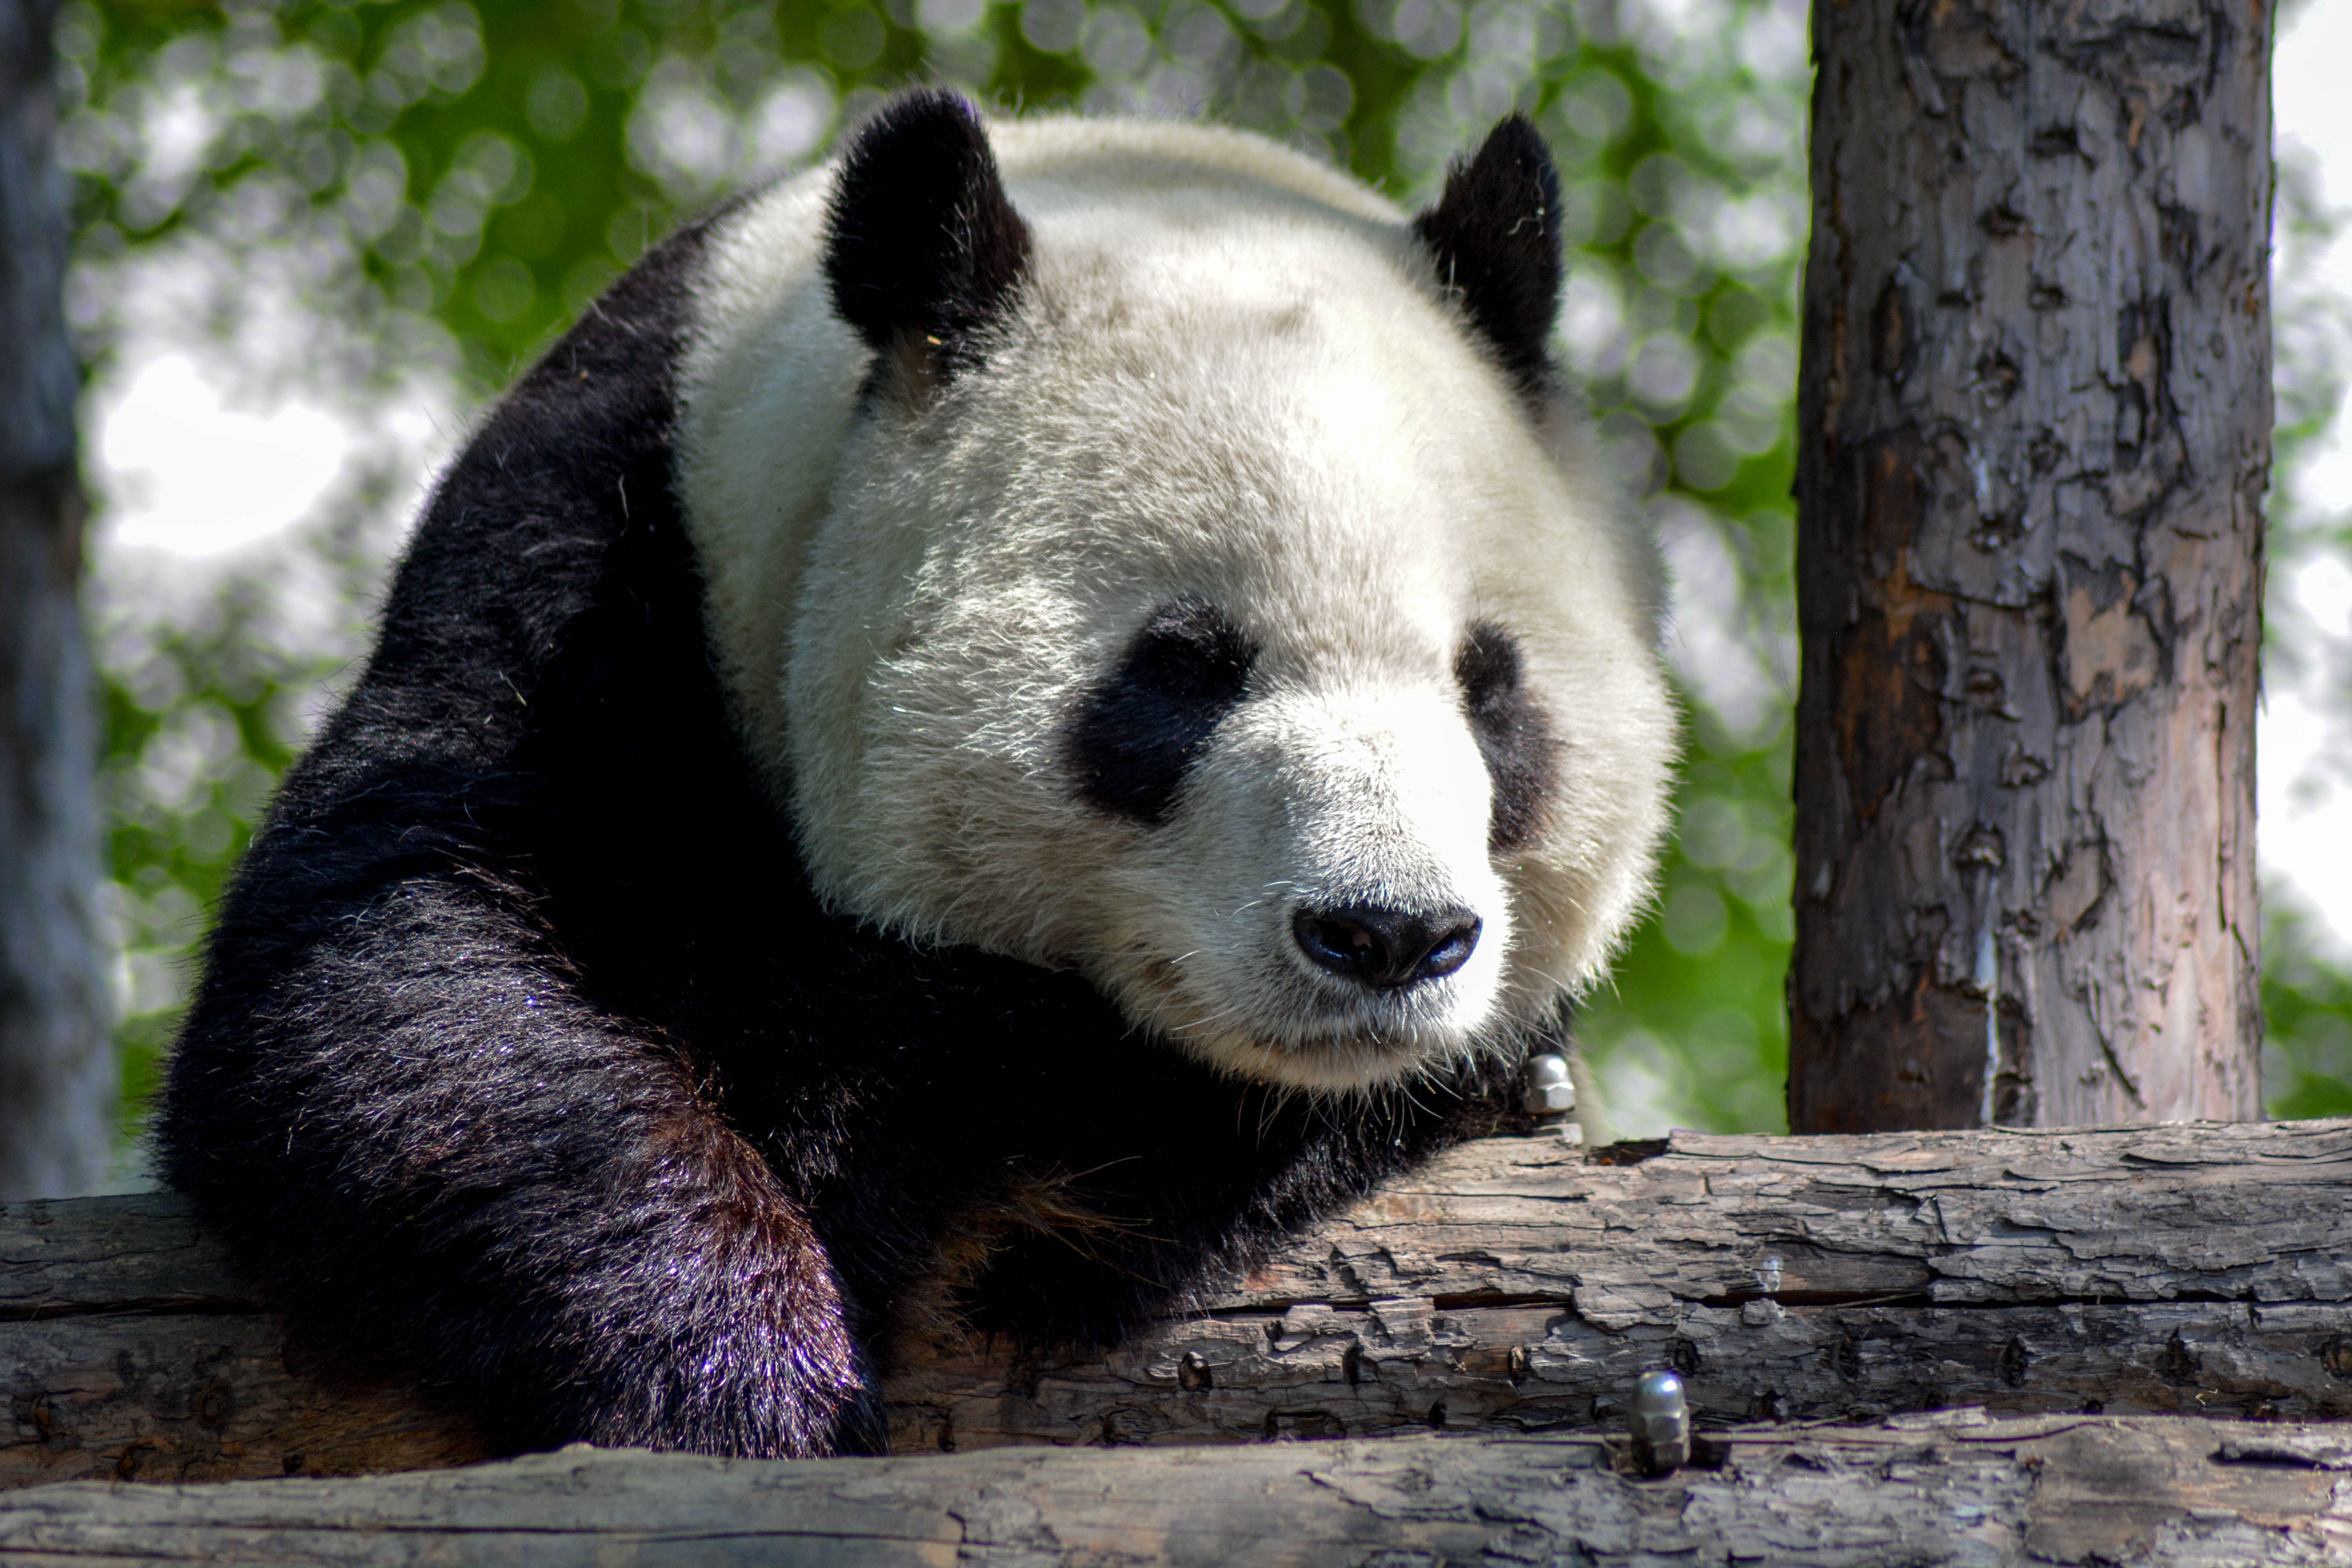 Panda Picture. Download Free Image